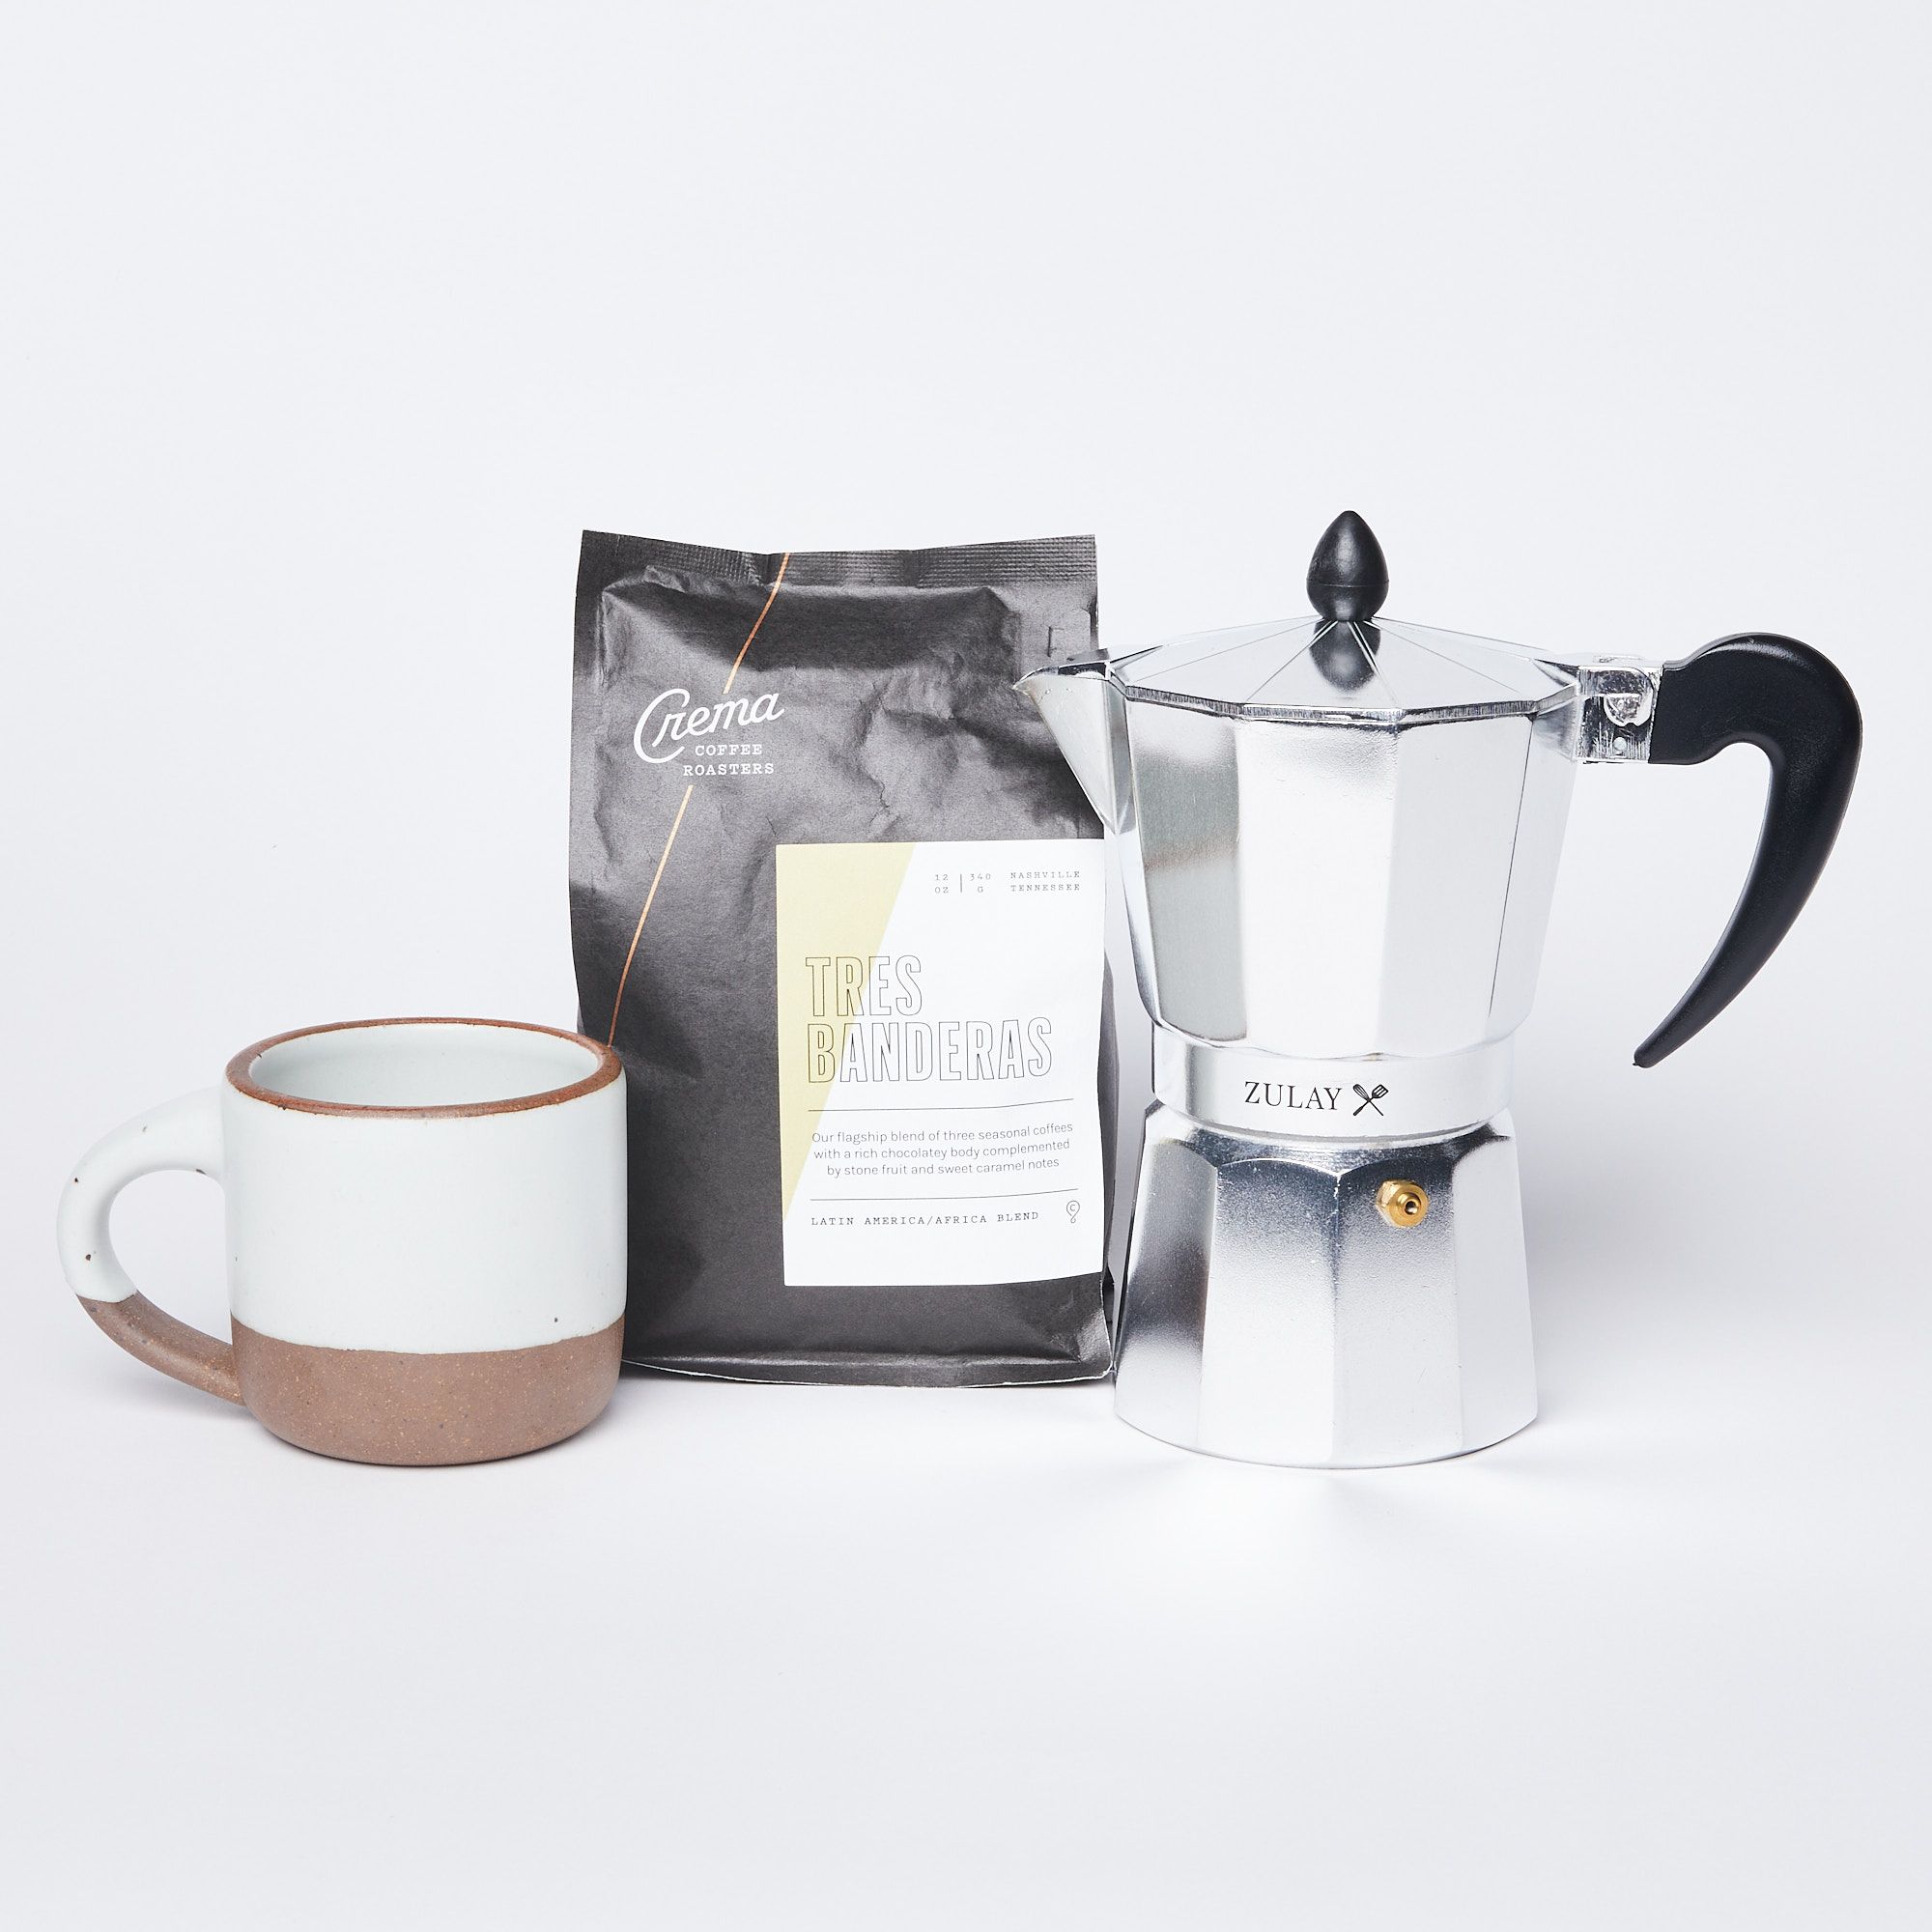 Small eggshell mug next to a black bag of coffee and a silver espresso maker